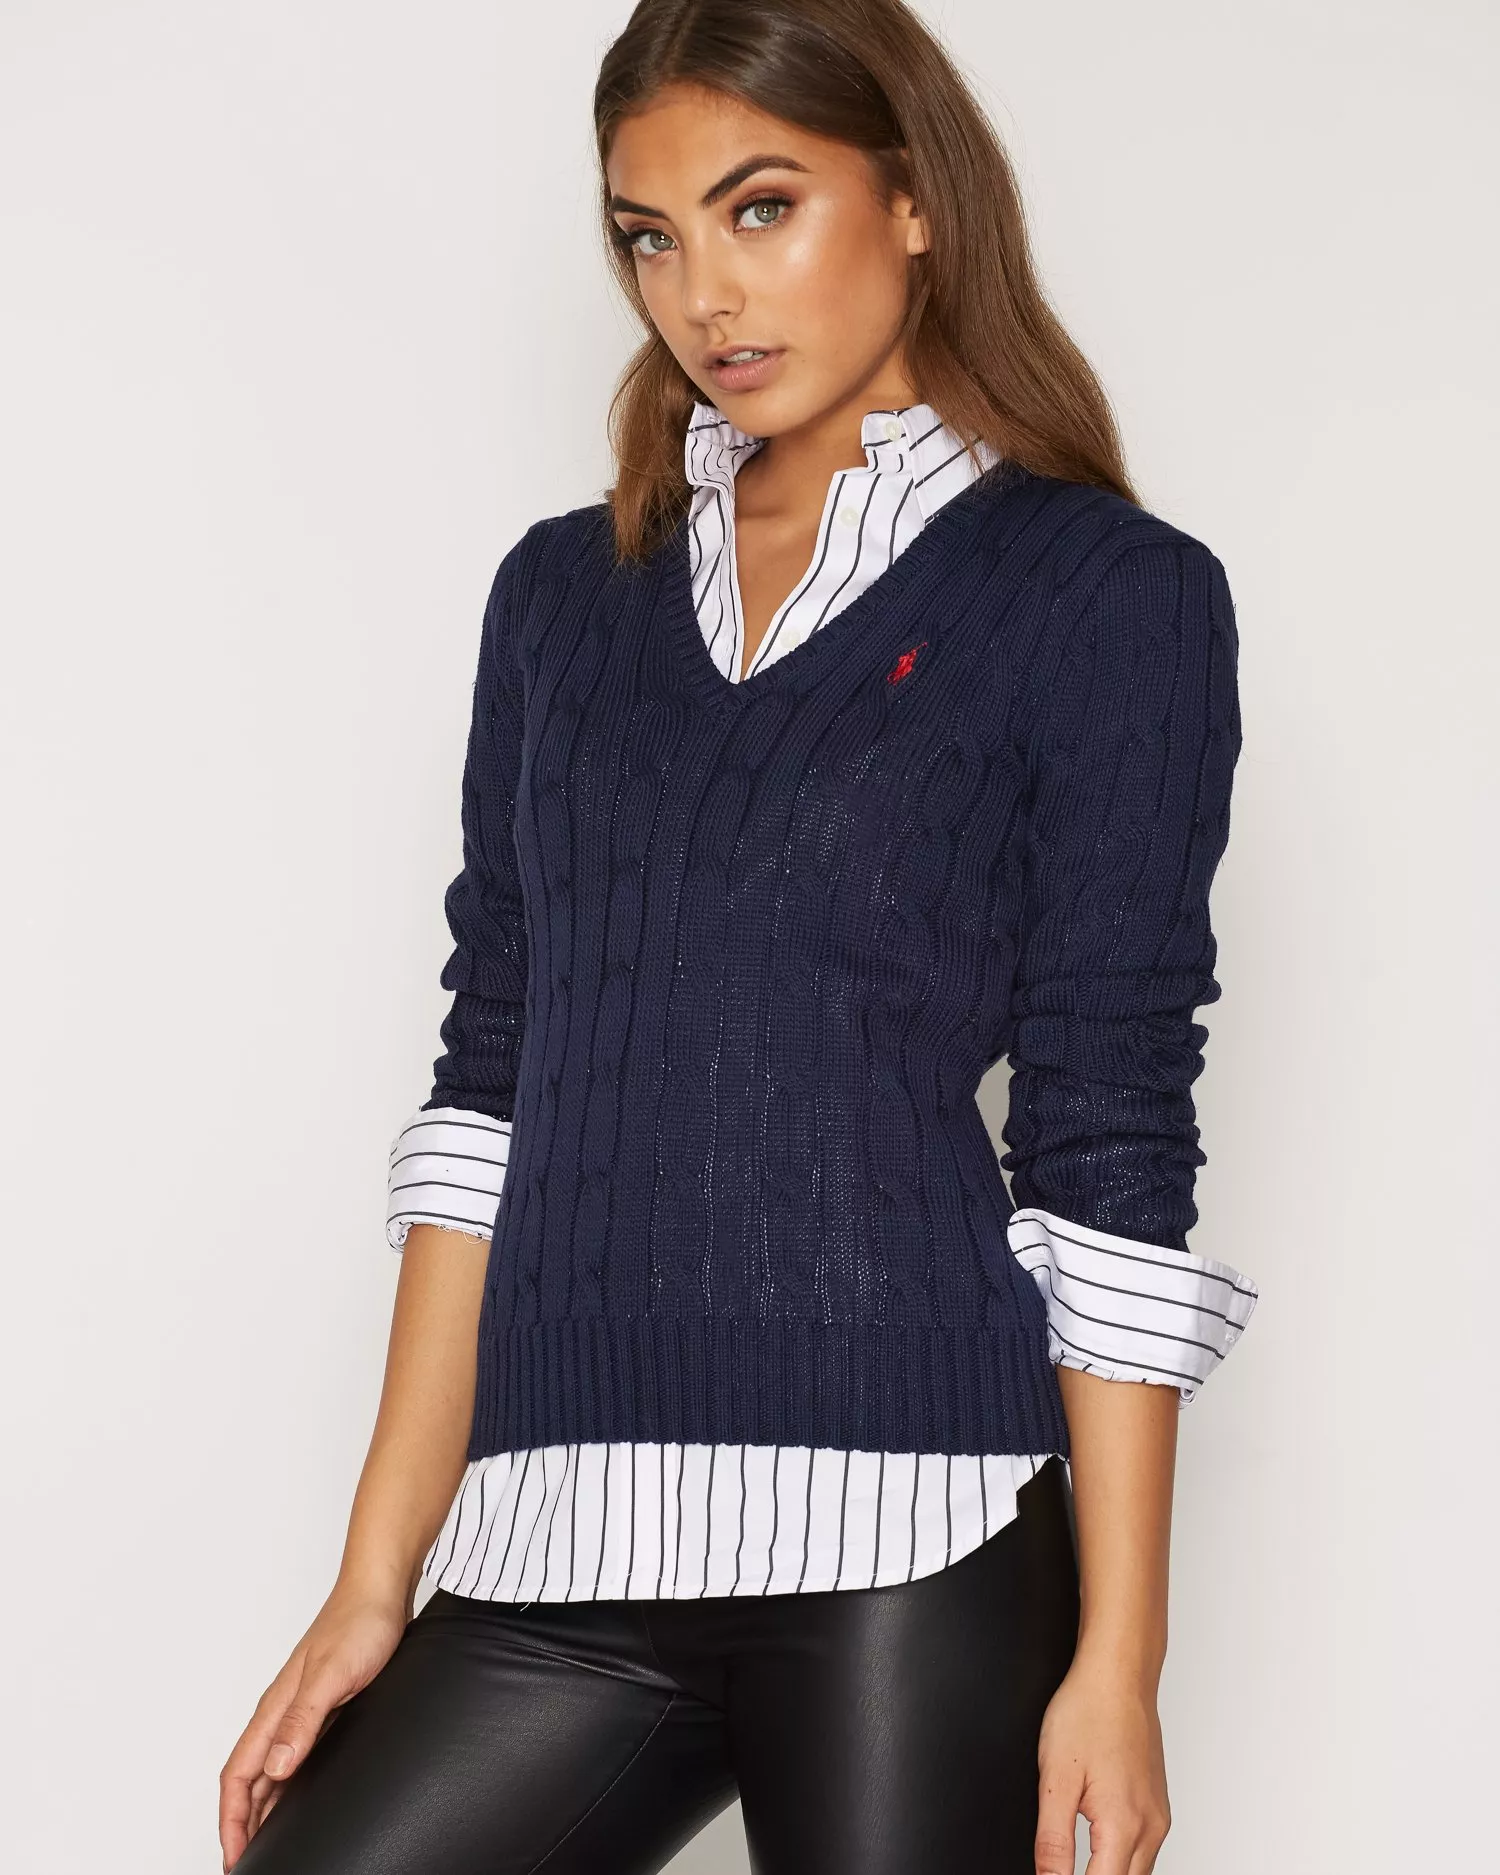 Kimberly Long Sleeve Sweater